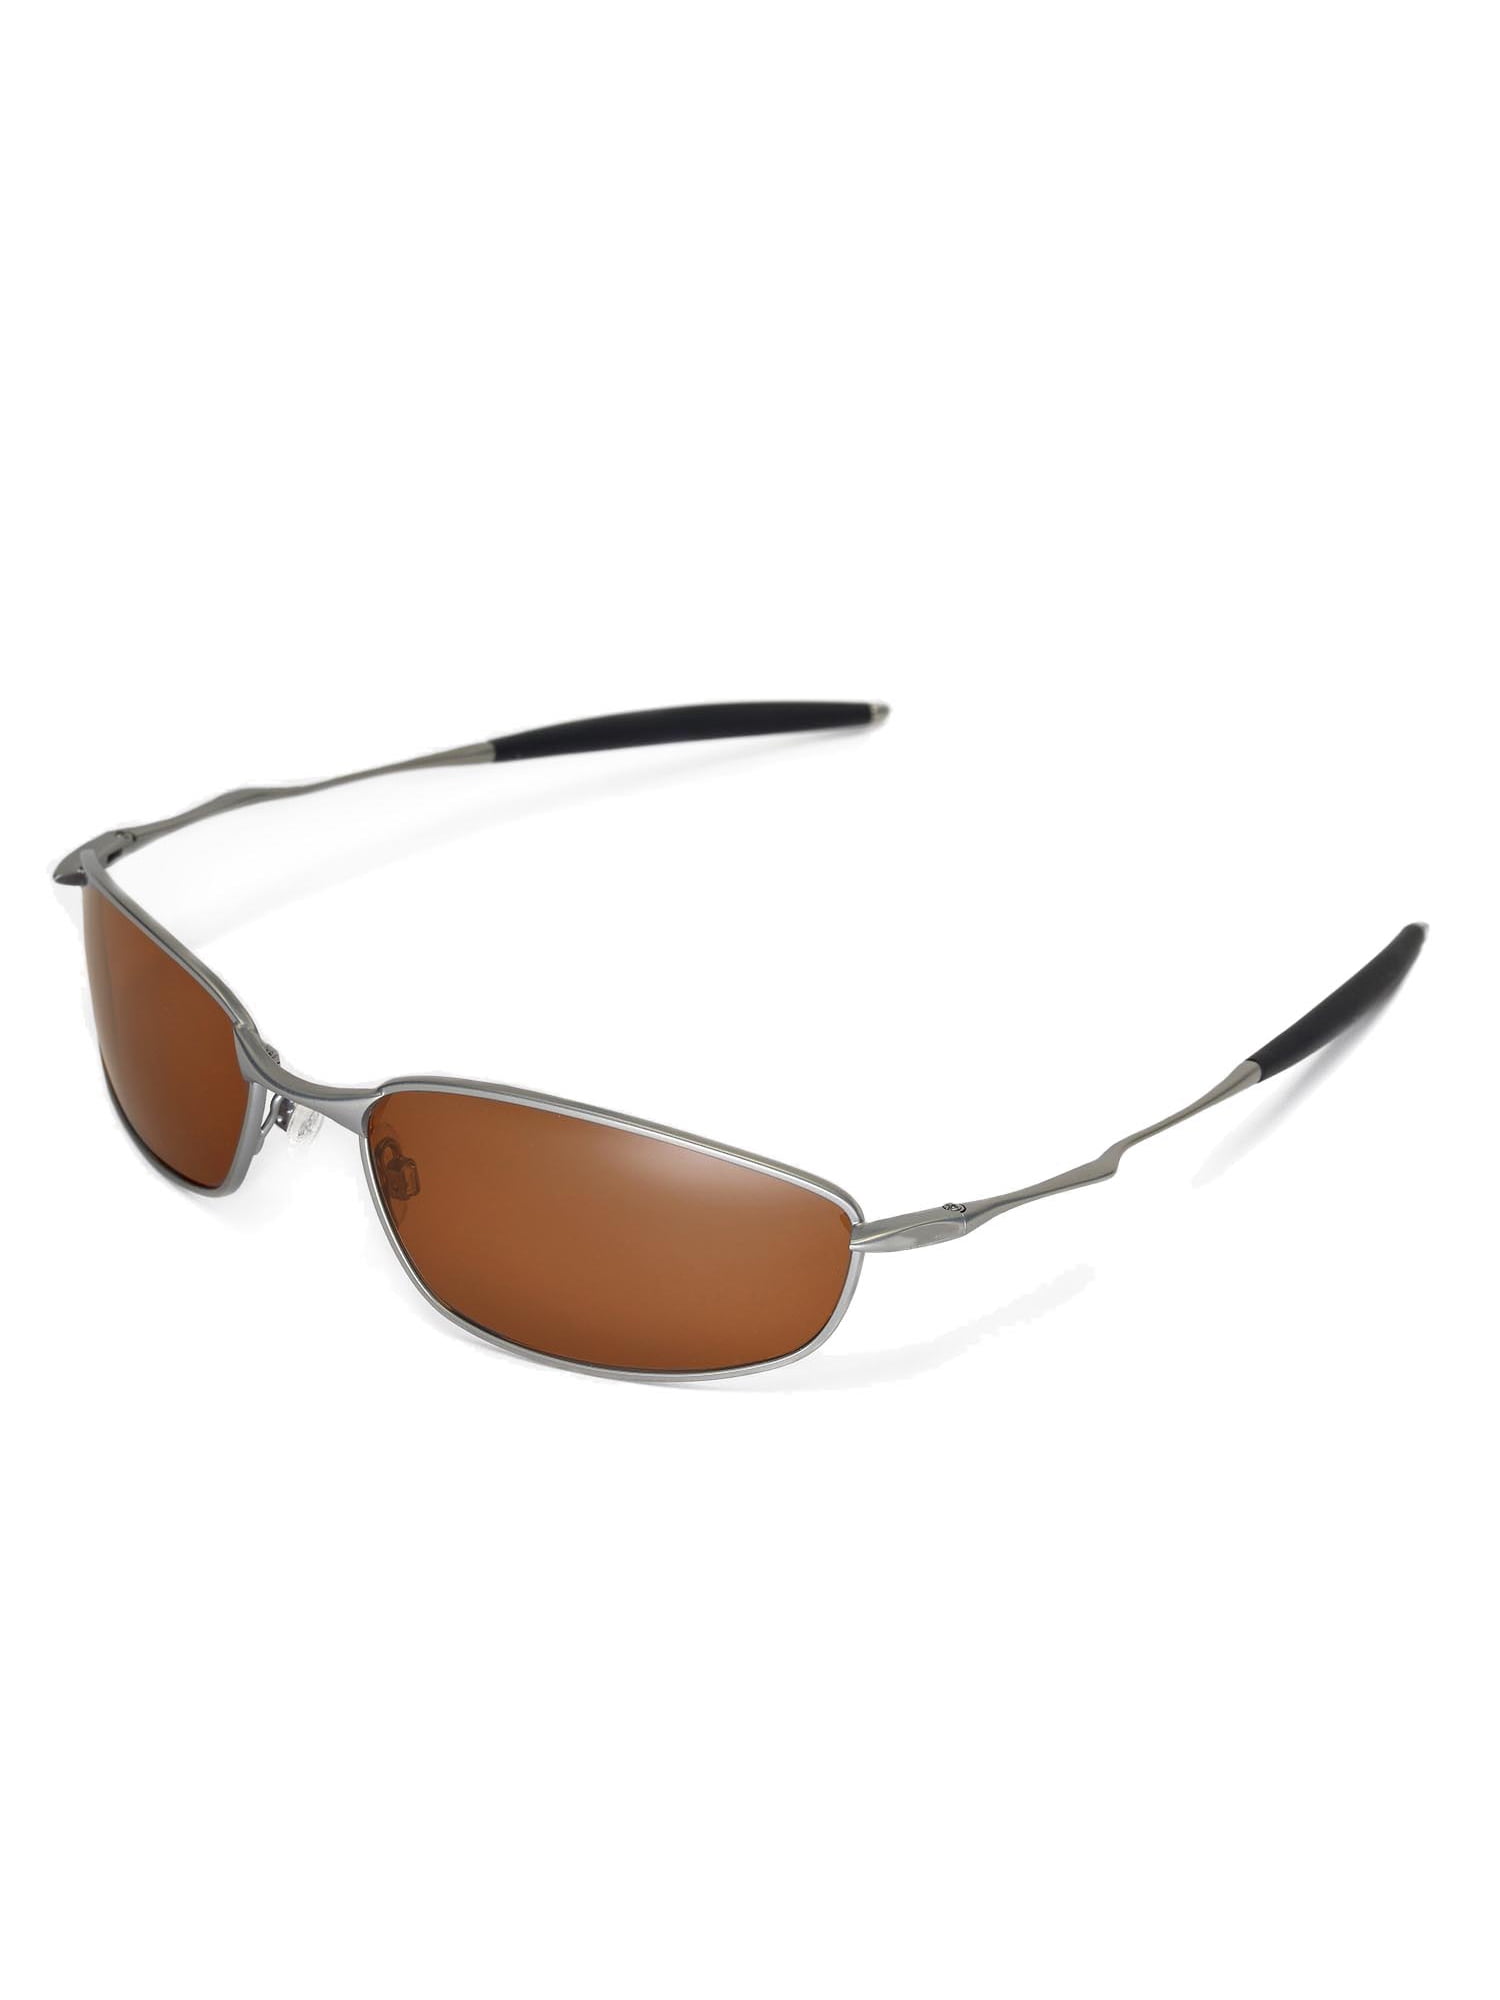 Walleva Titanium Polarized Replacement Lenses for Oakley Whisker Sunglasses  